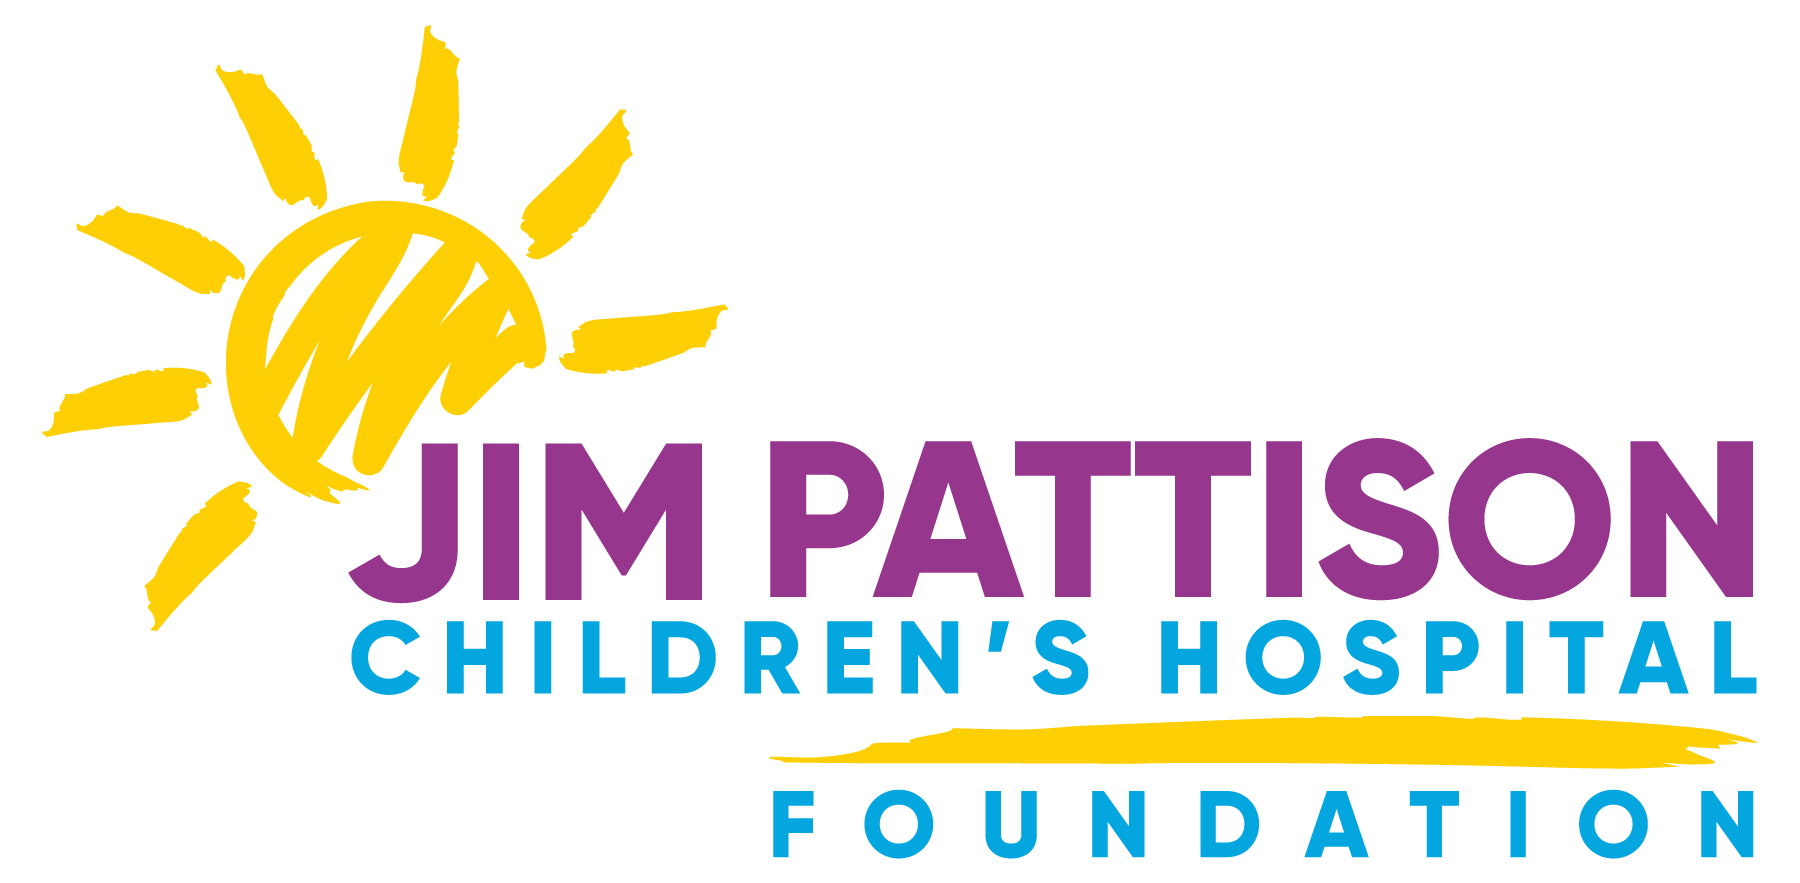 Jim pattison children's hospital foundation logo